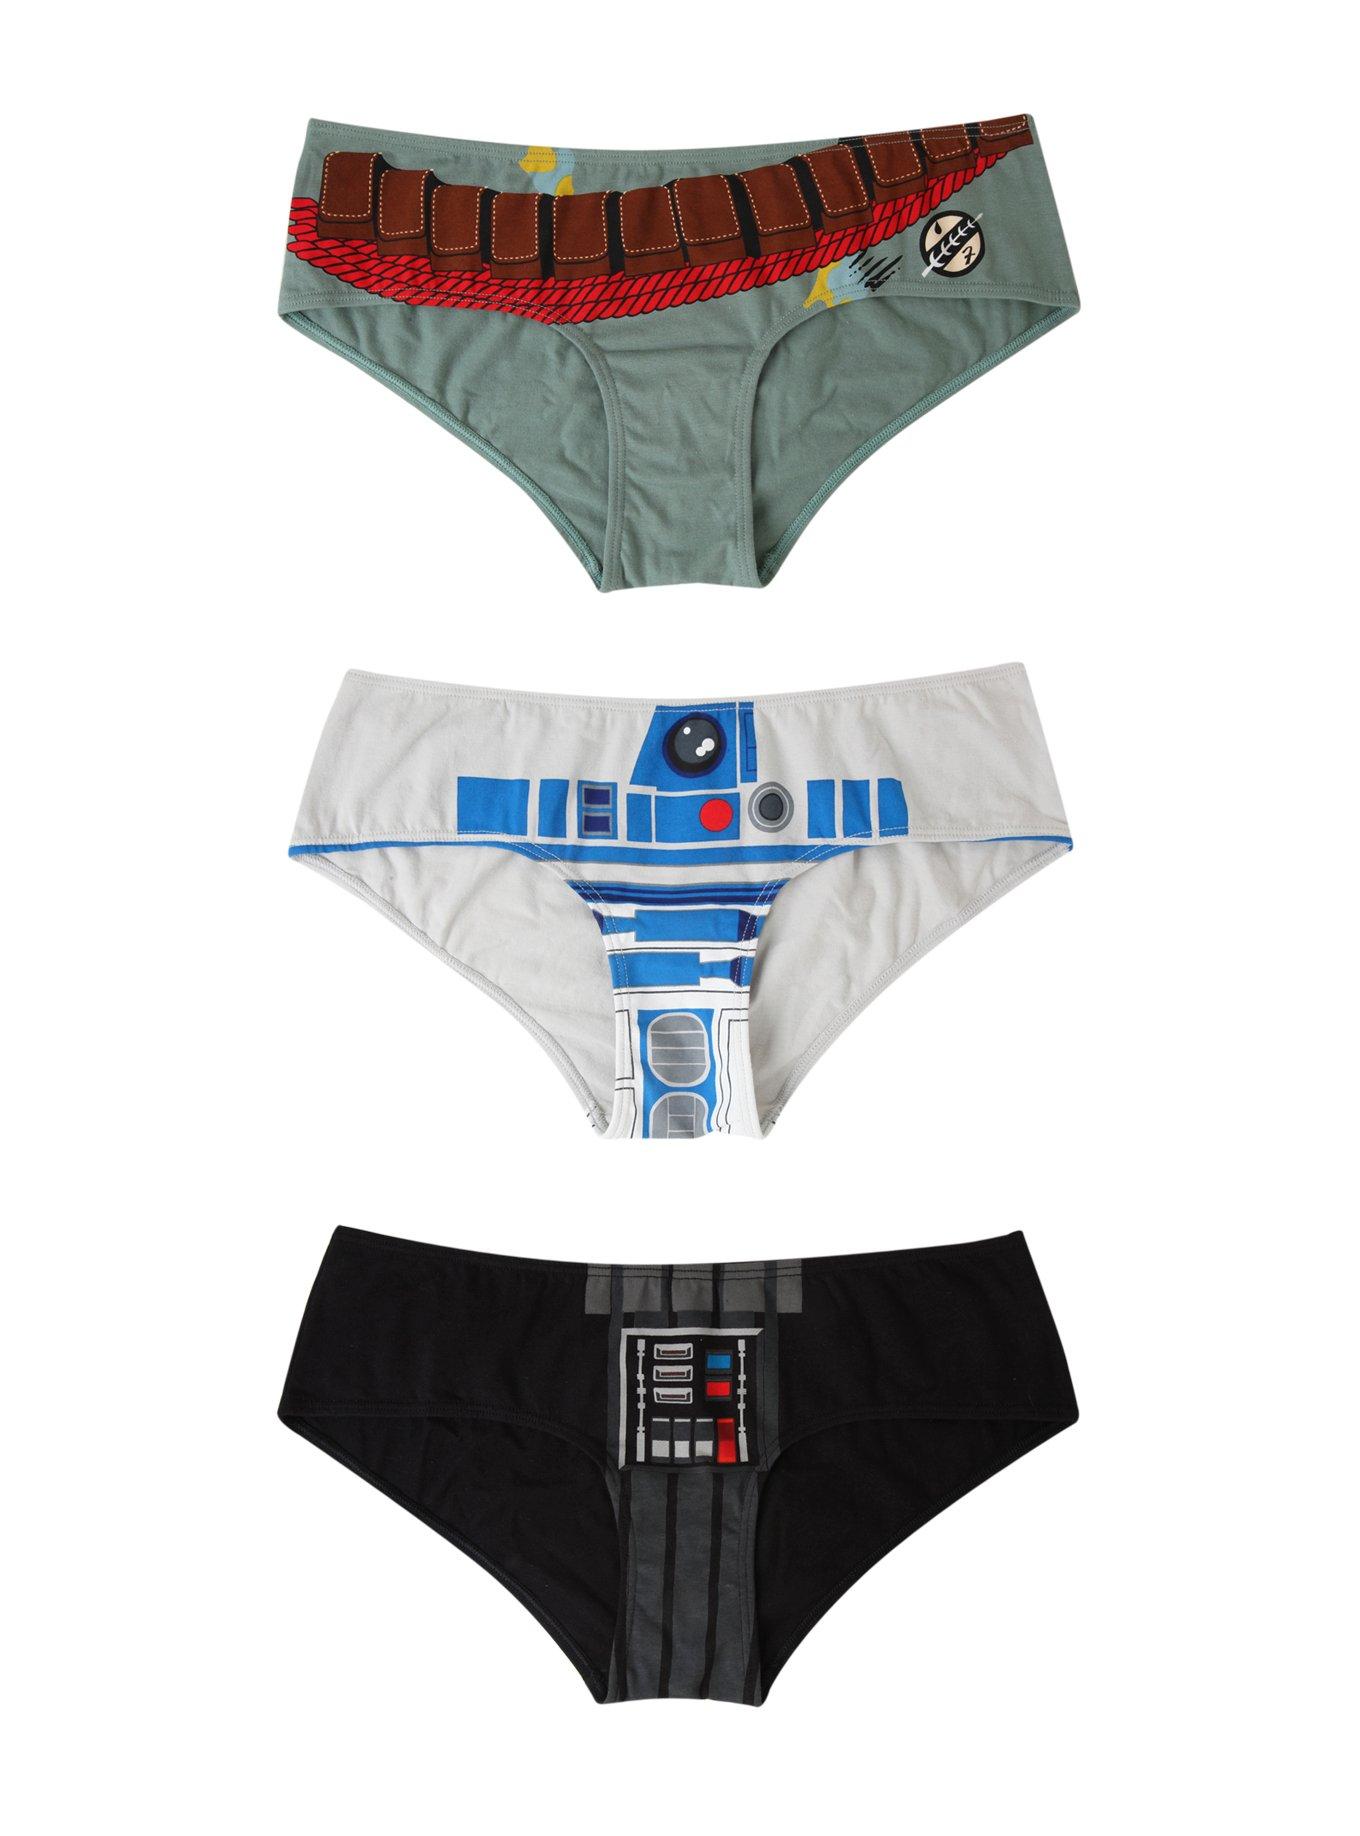 Star Wars lingerie added a new photo. - Star Wars lingerie